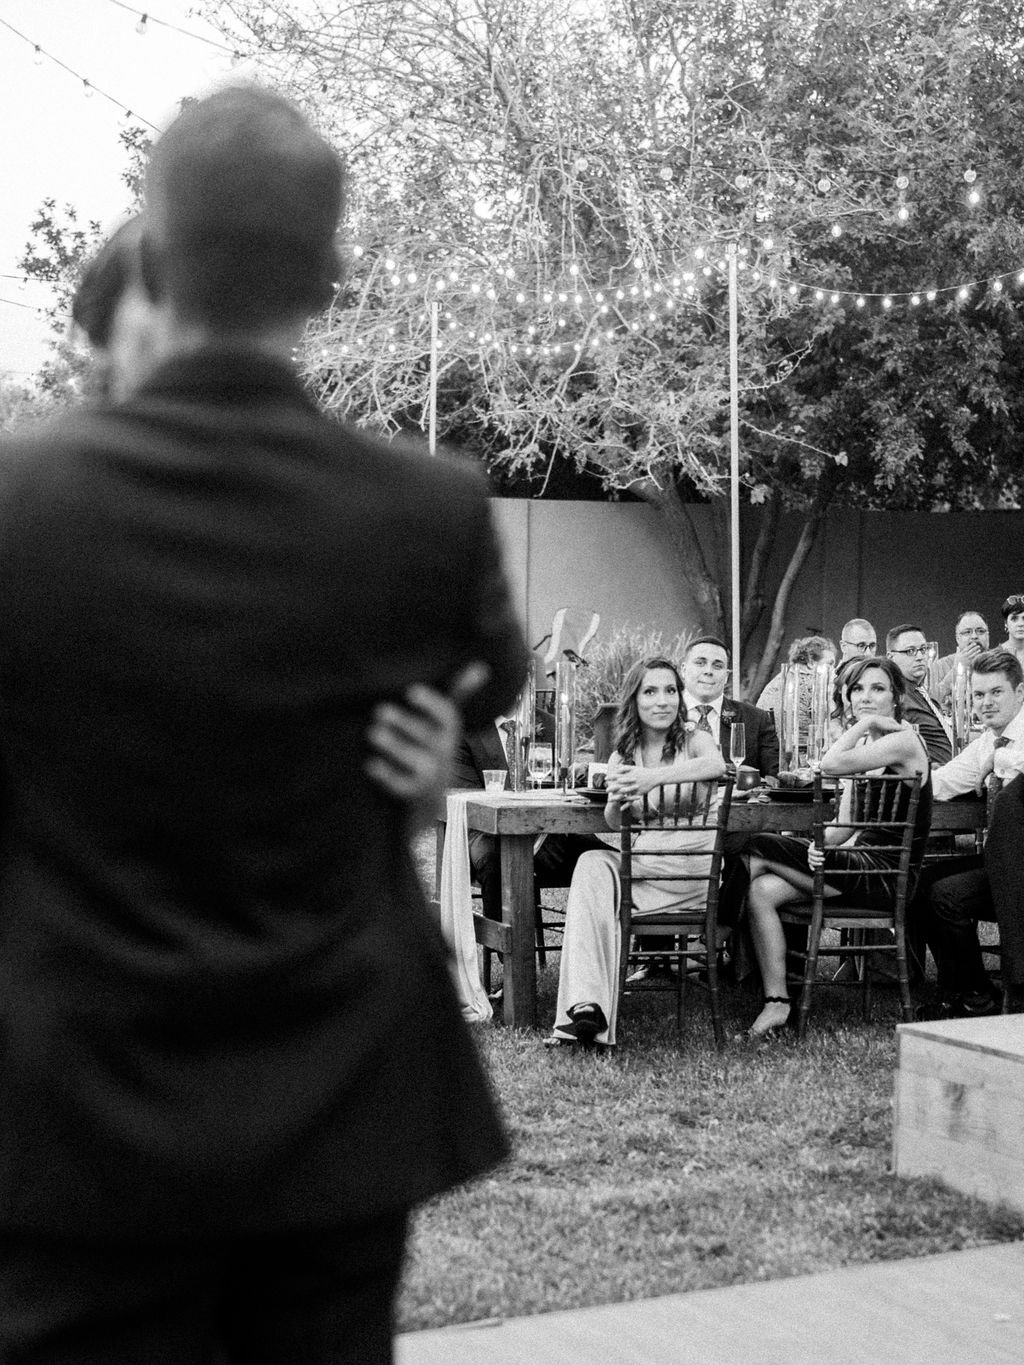 Dreamy Backyard Wedding with Moody Undertone - Konsider It Done - Arizona AZ Wedding Event Planner, Designer, Coordinator in Scottsdale, Phoenix, Paradise Valley,  Tucson, Sedona, Destination, California, Lake Tahoe 9.jpg